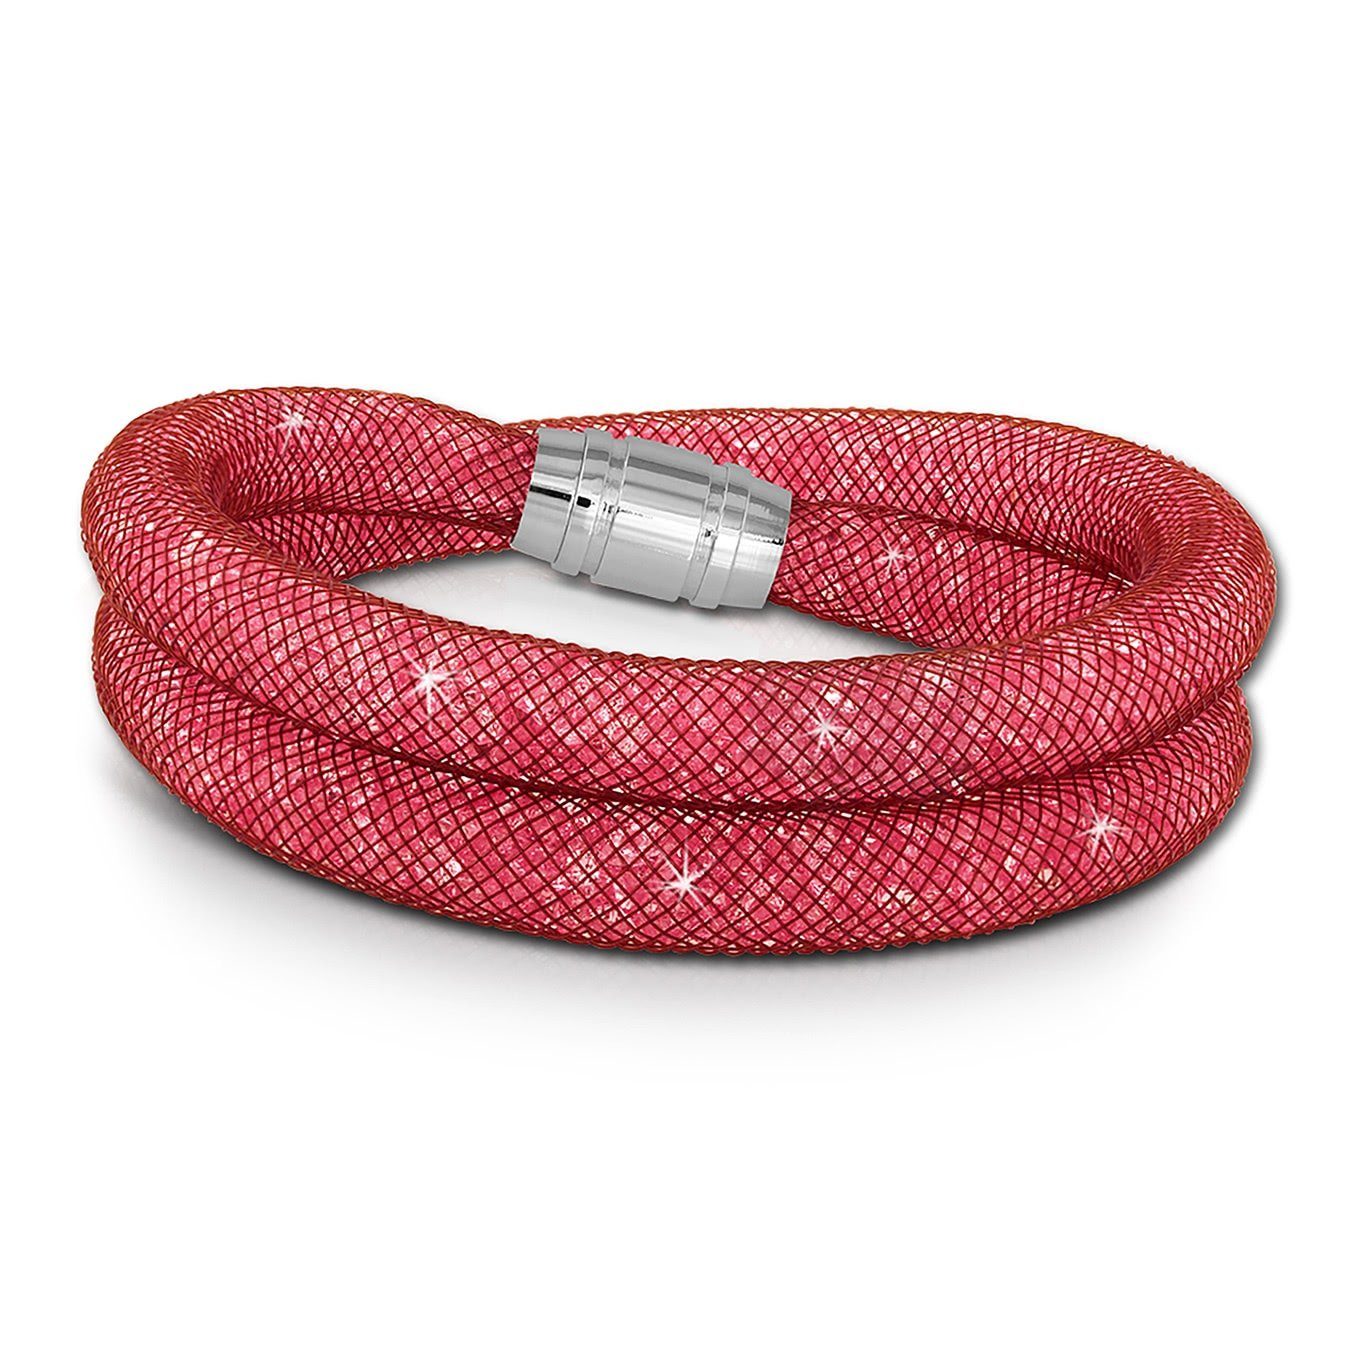 SilberDream Edelstahlarmband SilberDream Armband rosa Arm-Schmuck (Armband), Damenarmband mit Edelstahl-Verschluss, Farbe: rot, rosa Kristalle